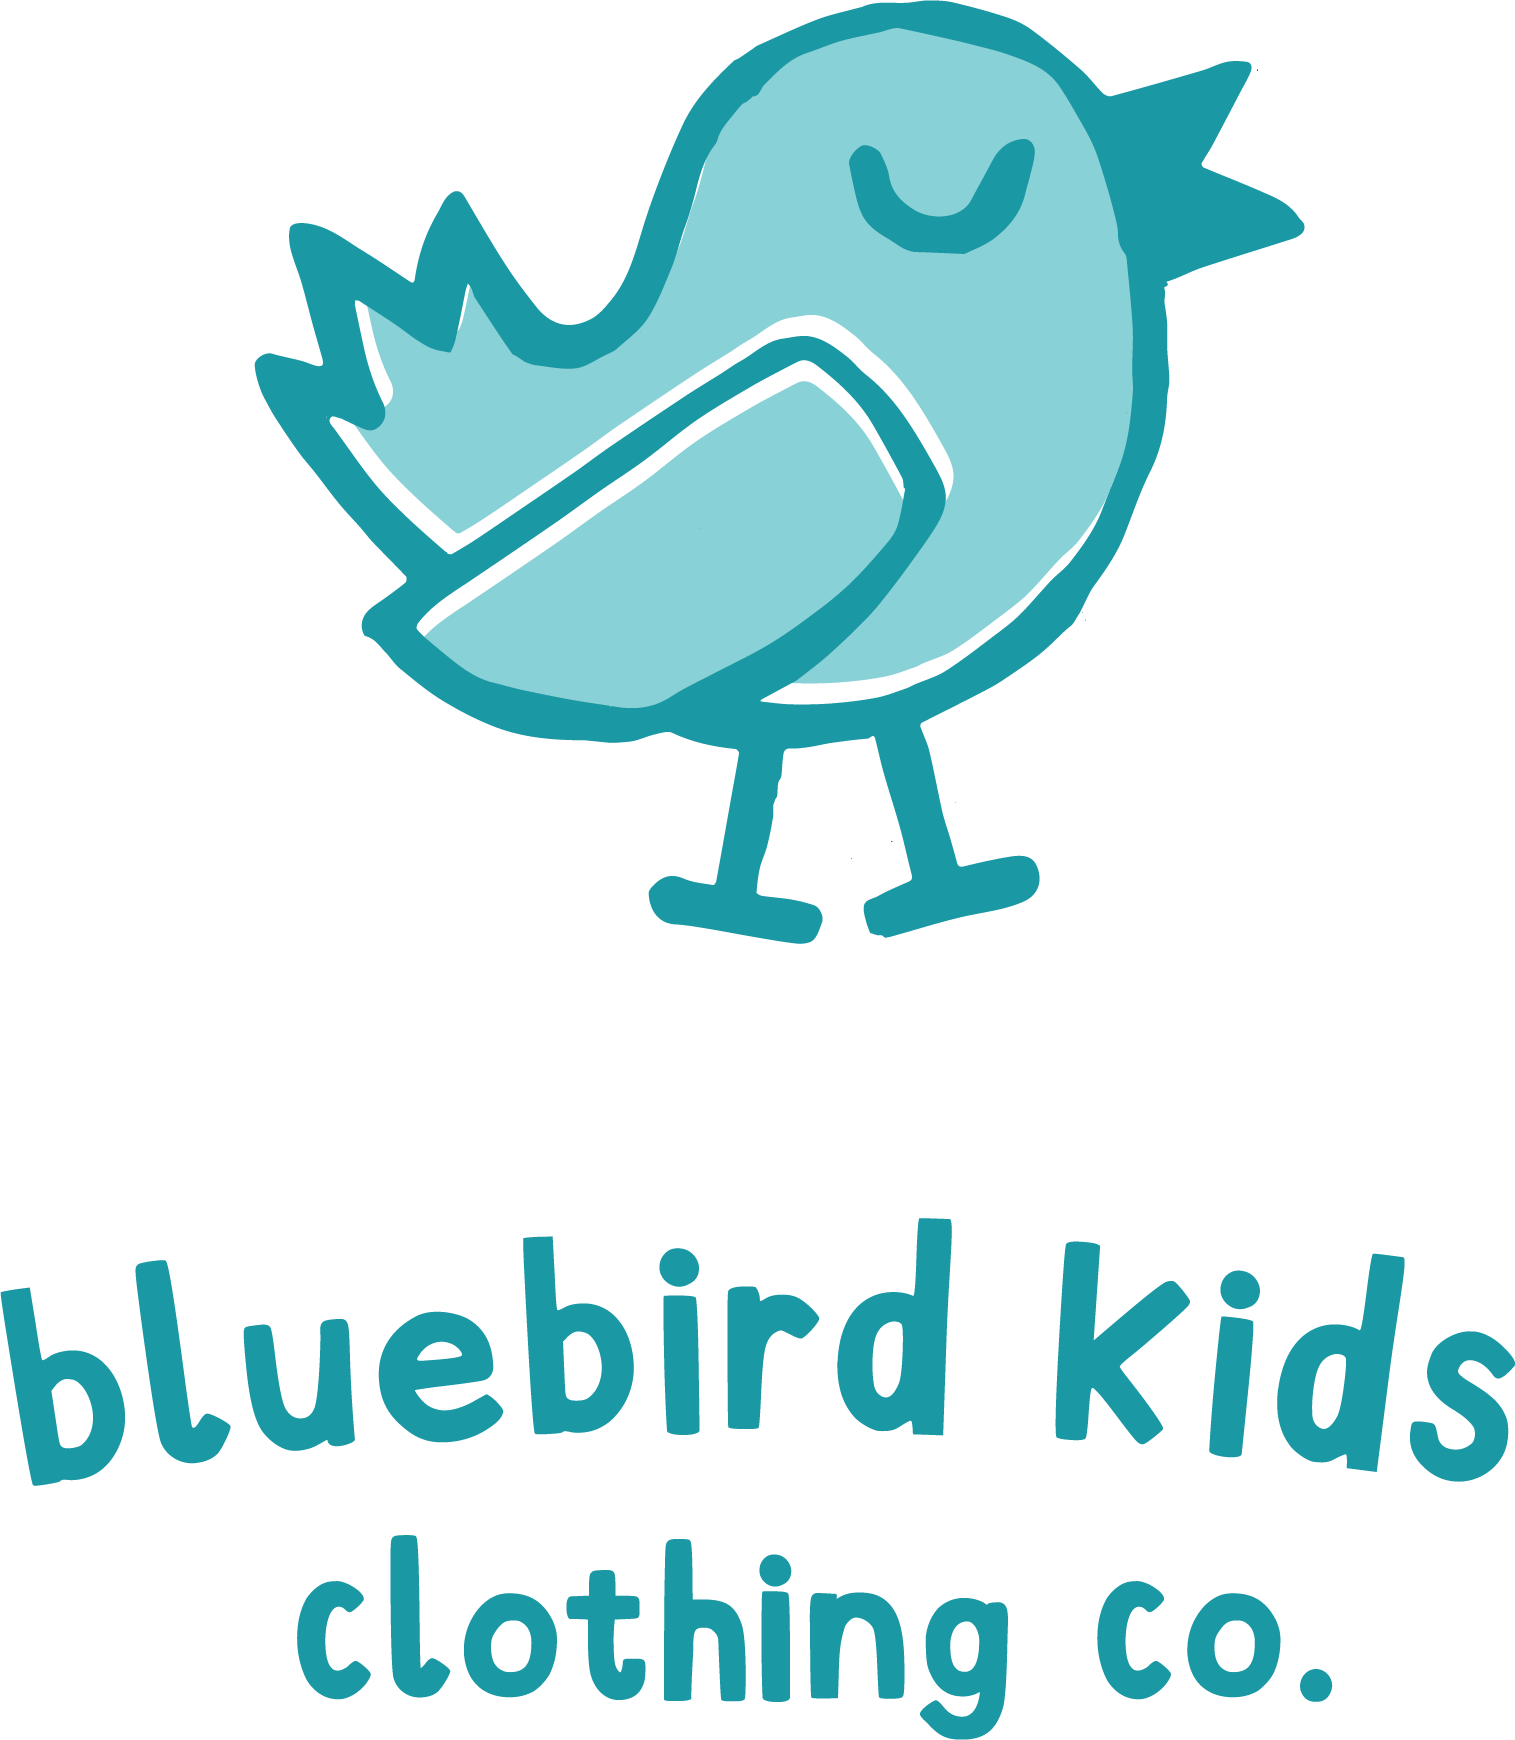 BLUEBIRD KIDS CLOTHING COMPANY